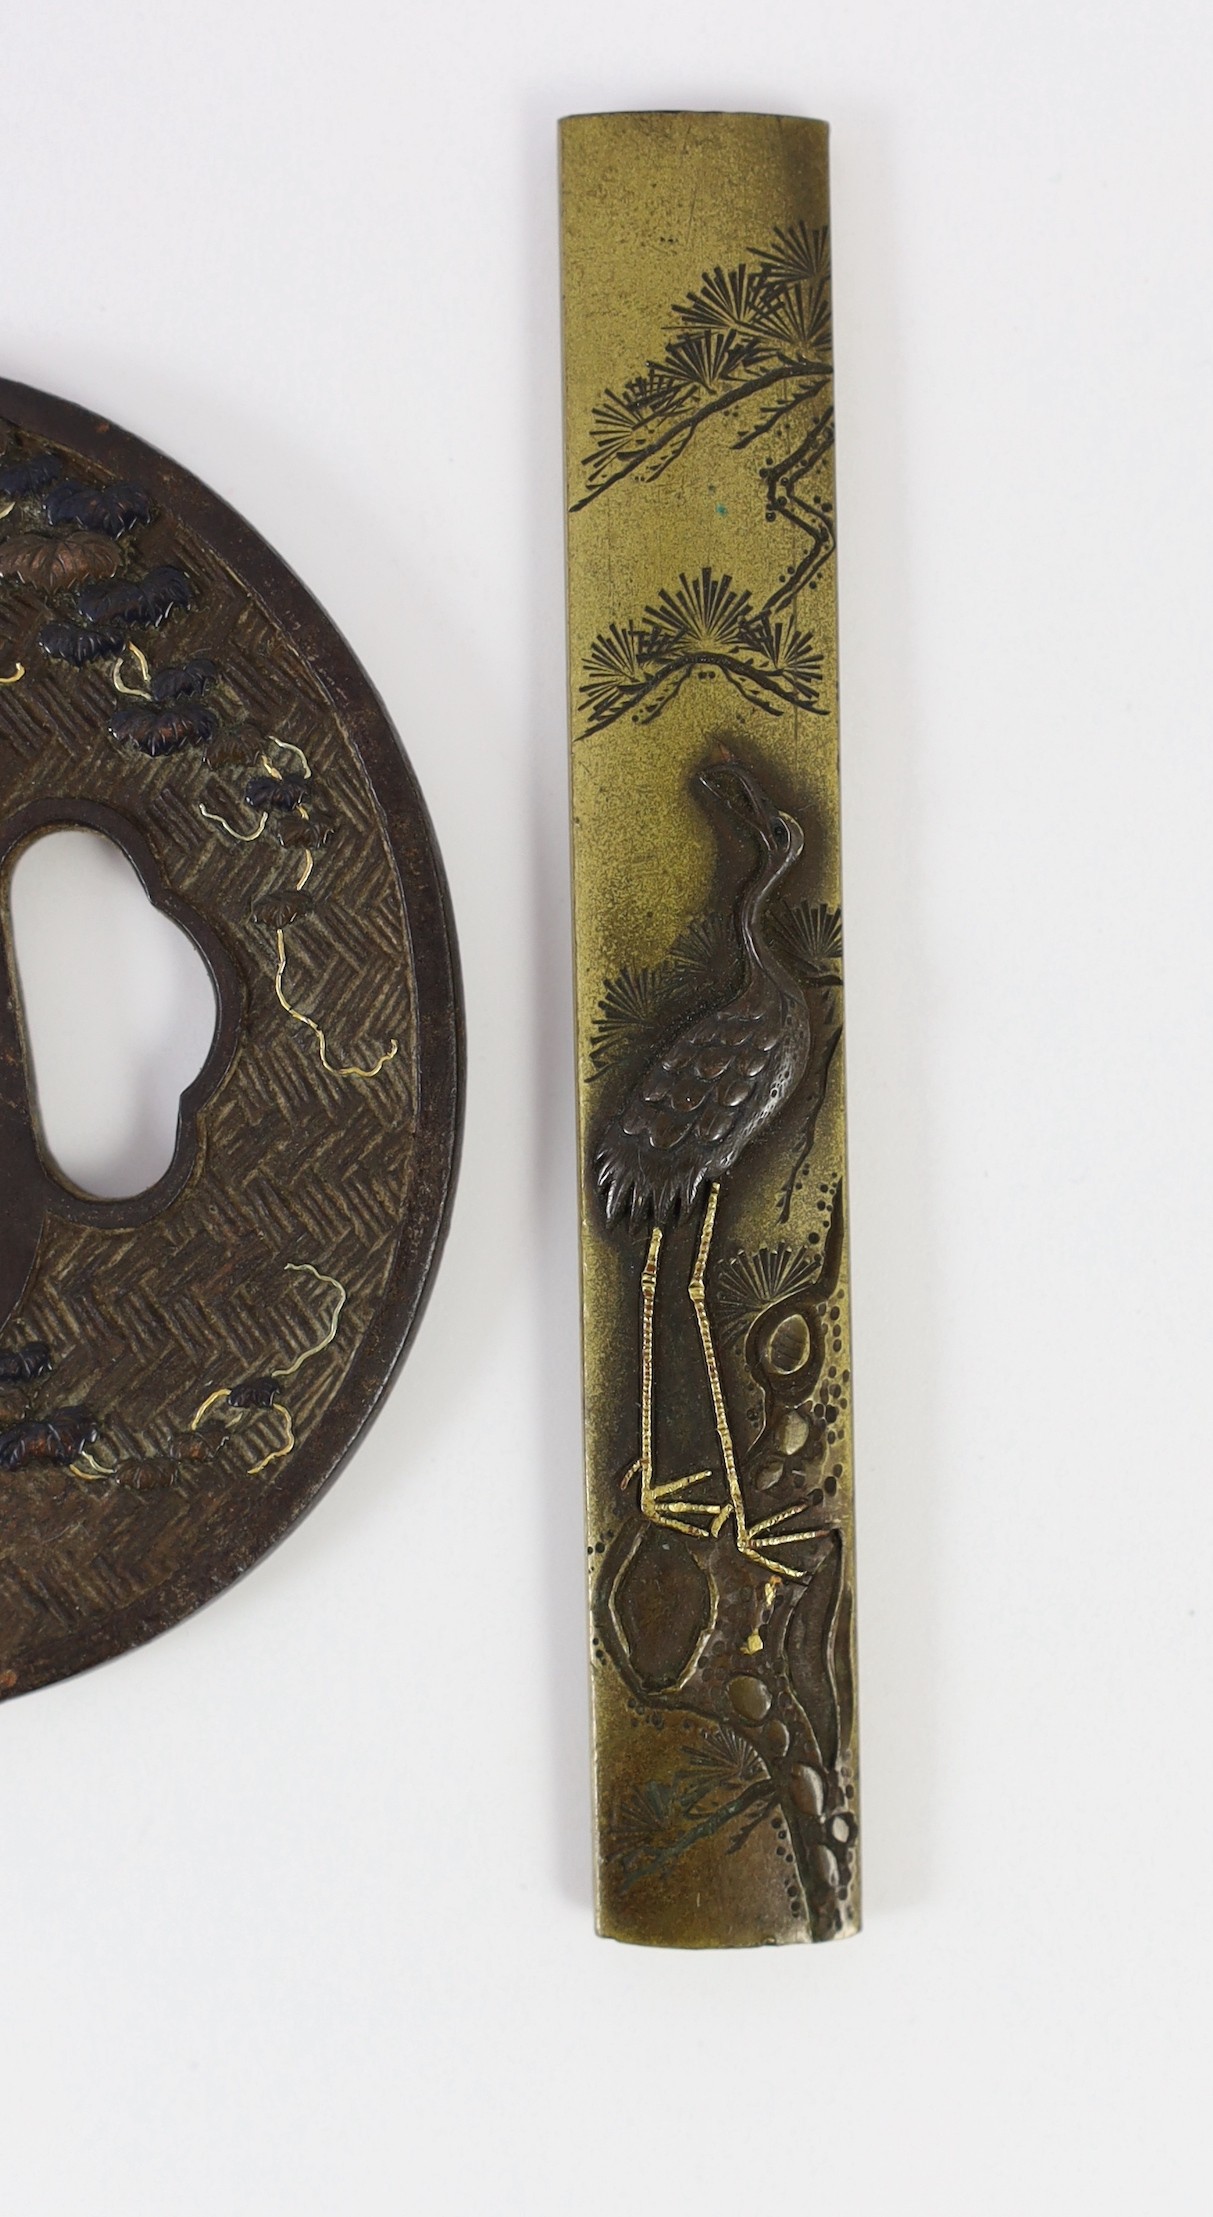 A group of Japanese bronze, iron and mixed metal tsuba and a kozuka knife handle, 19th century